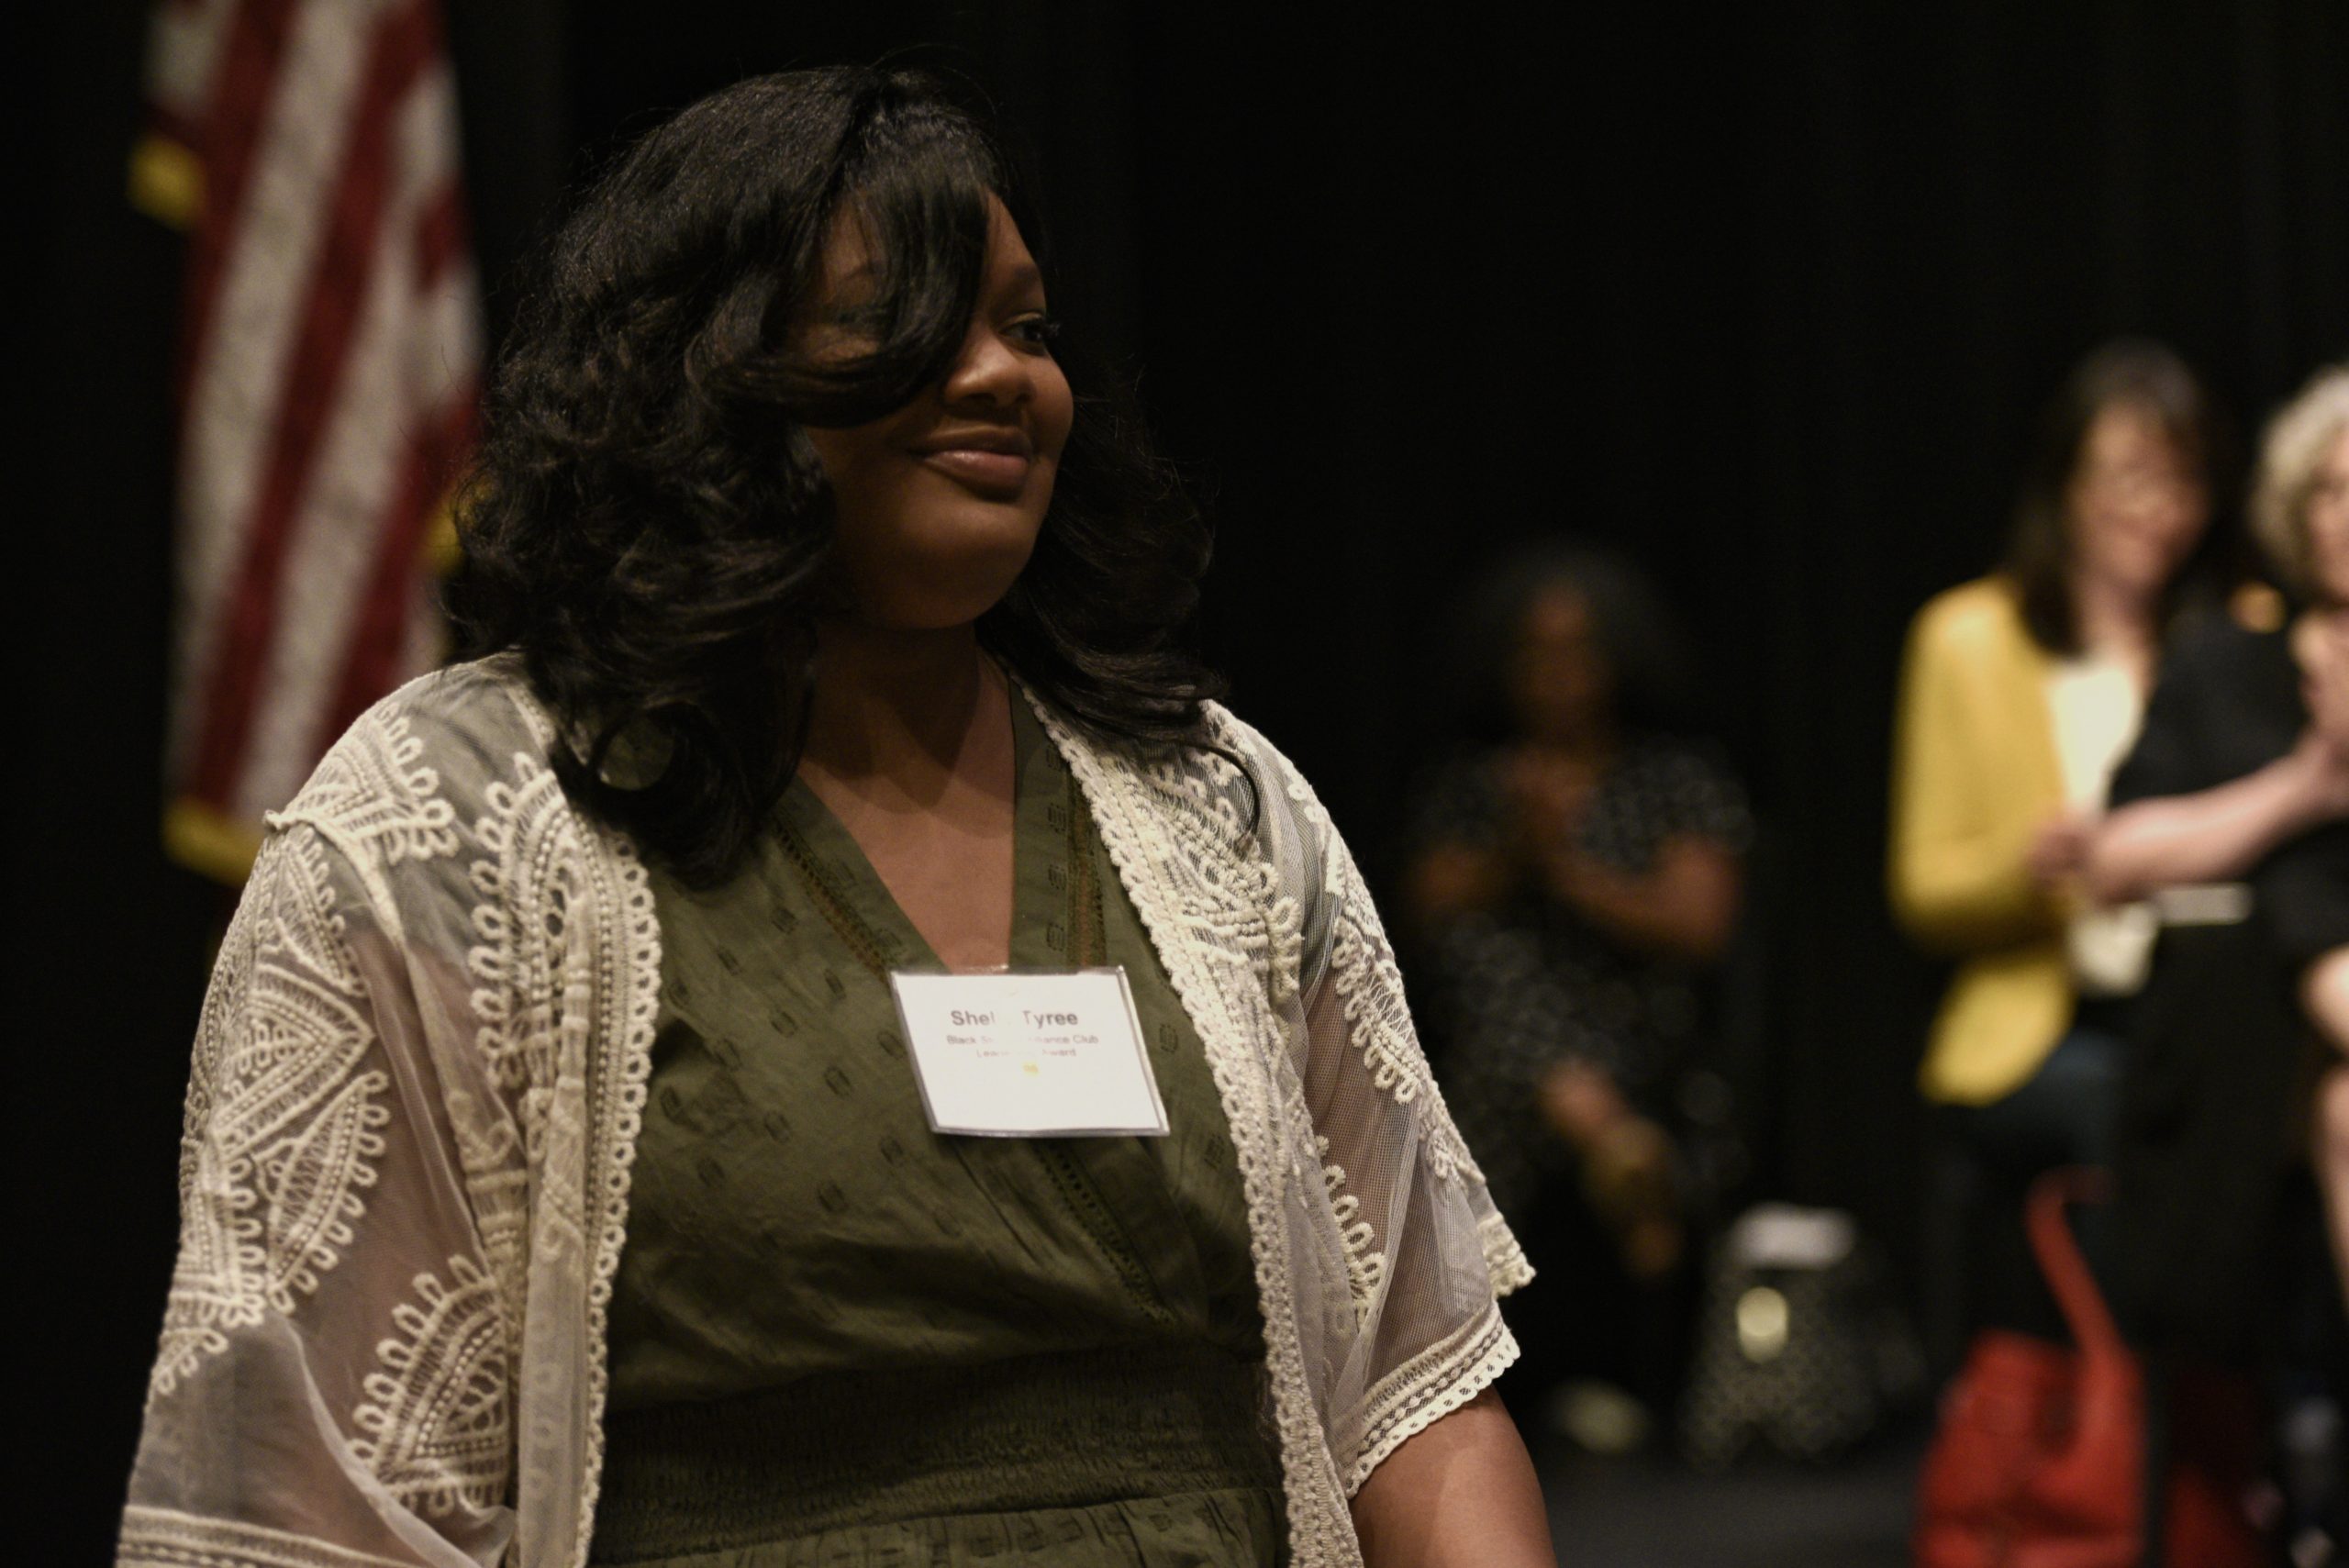 Shelaira Tyree receives the Black Student Alliance Award